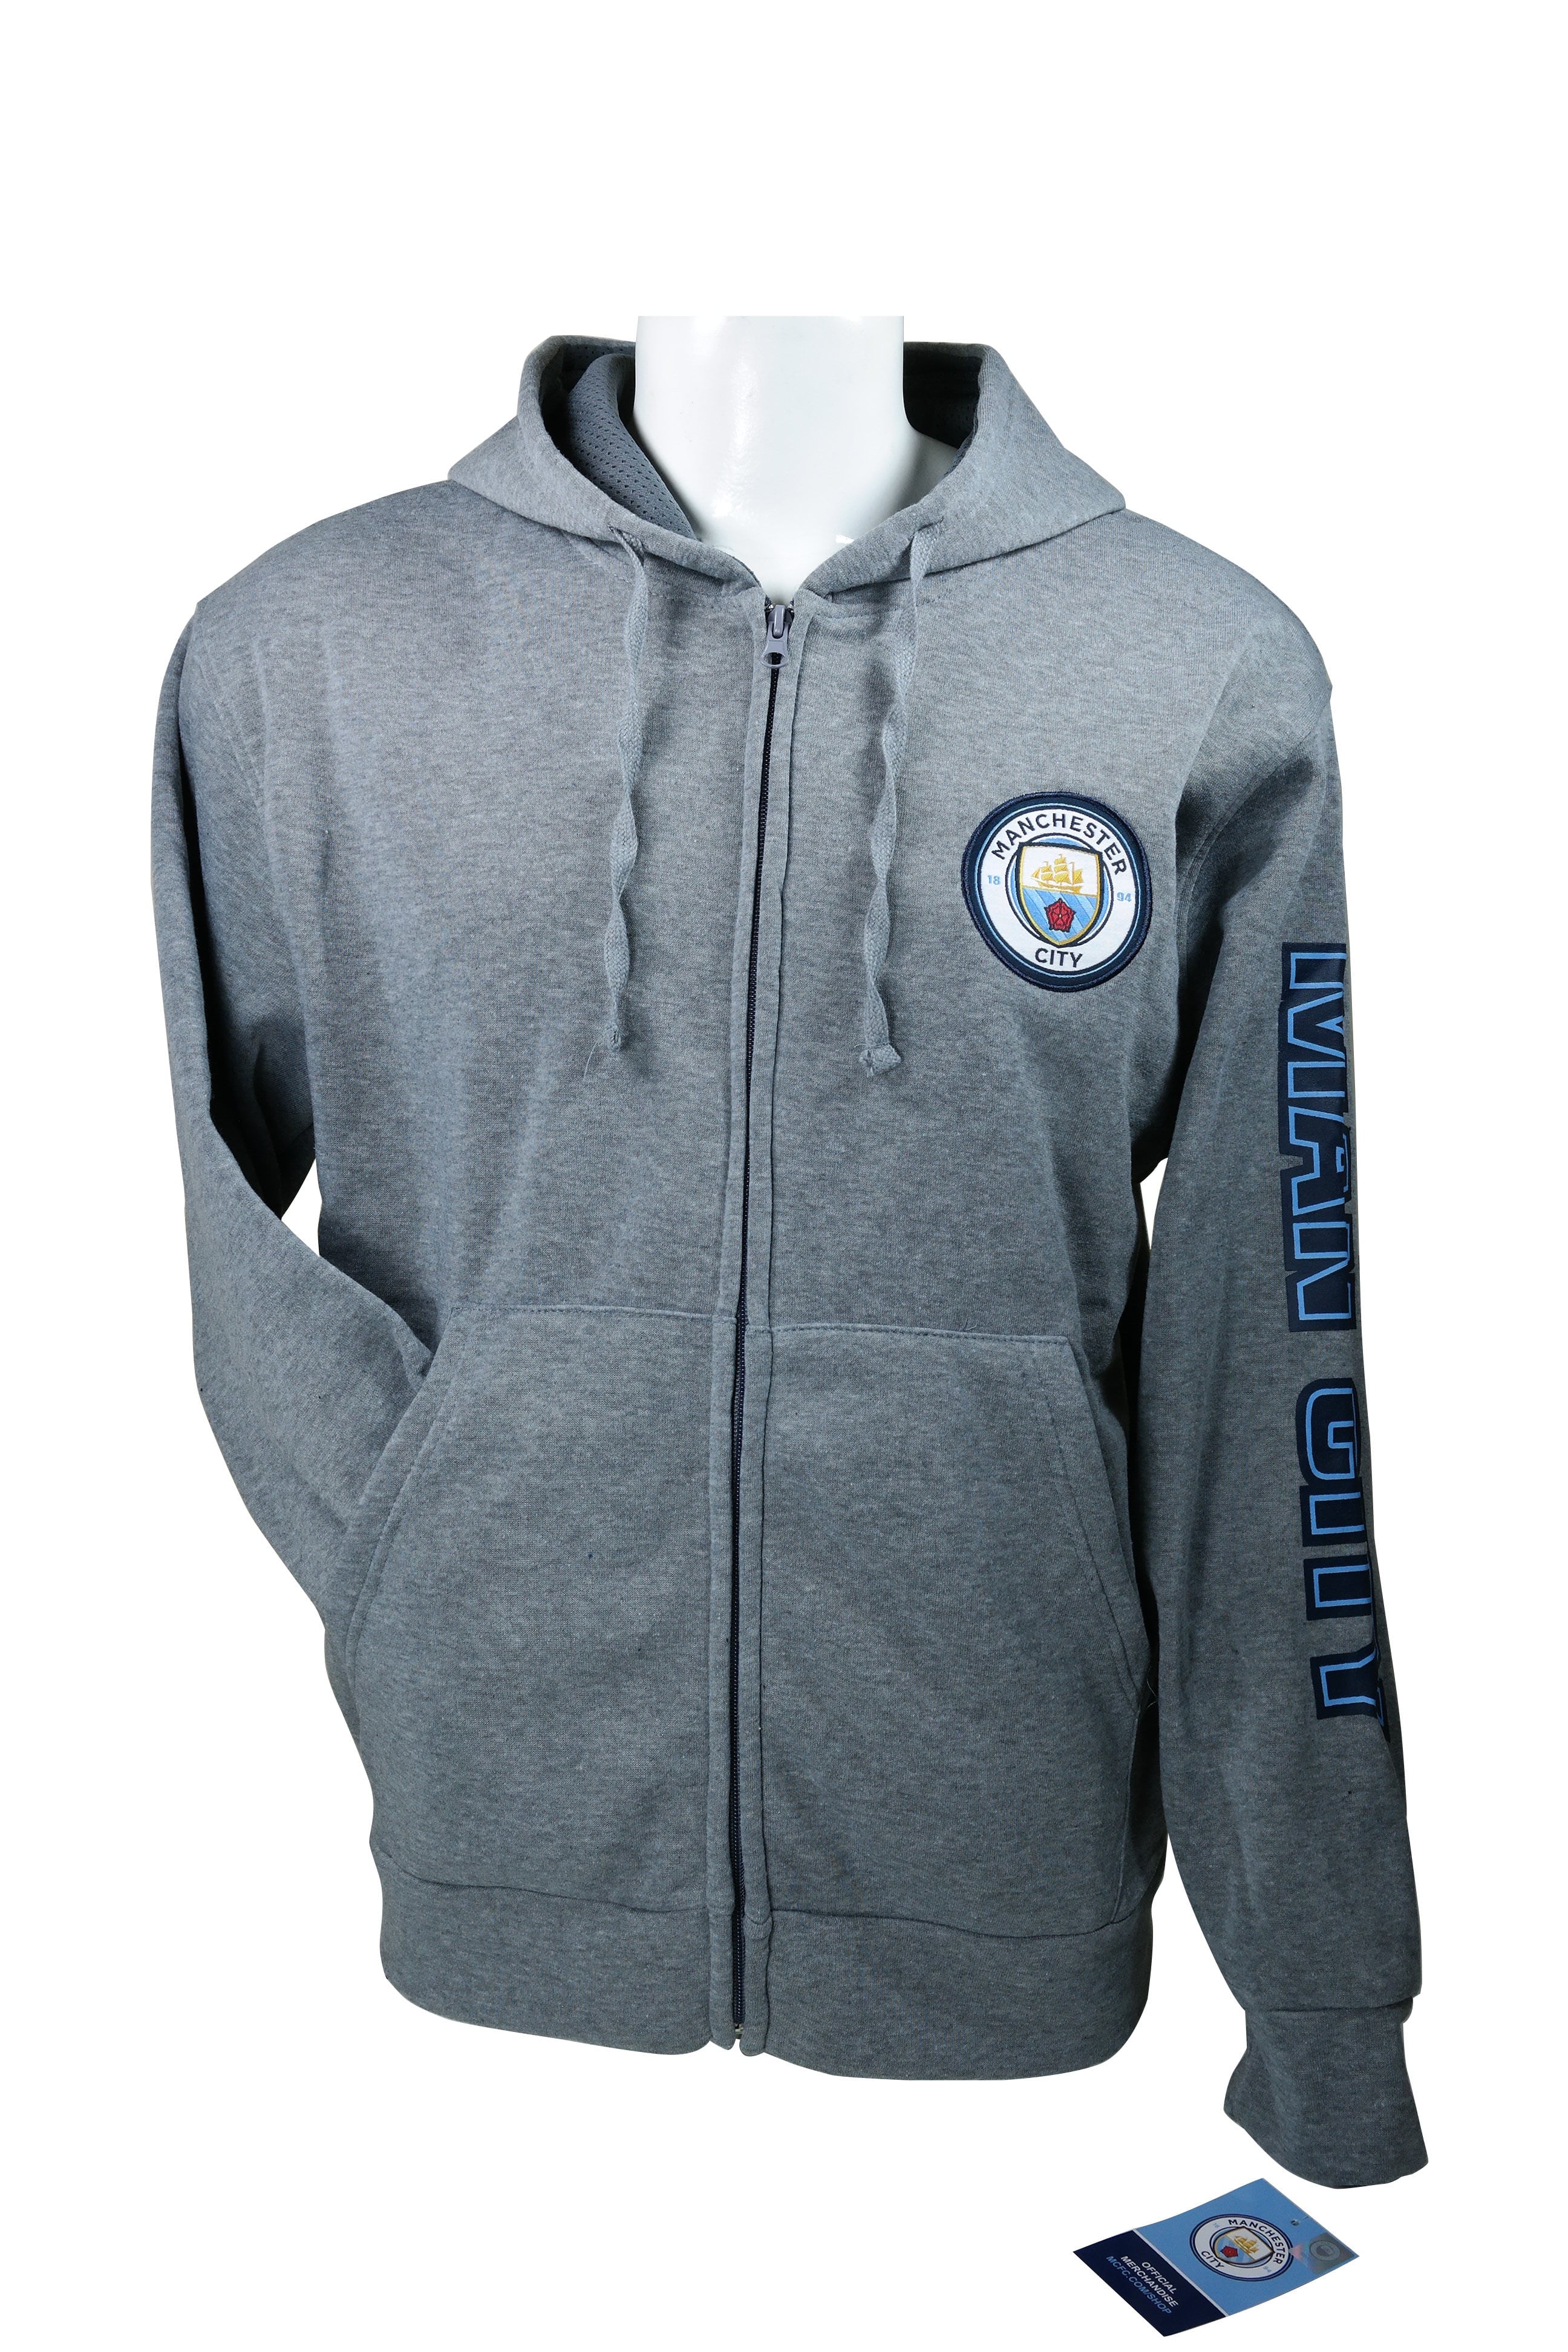 pomp Egomania rommel Manchester City F.C. Zipper Front Fleece Jacket Sweatshirt Official License  Soccer Hoodie Small 011 - Walmart.com